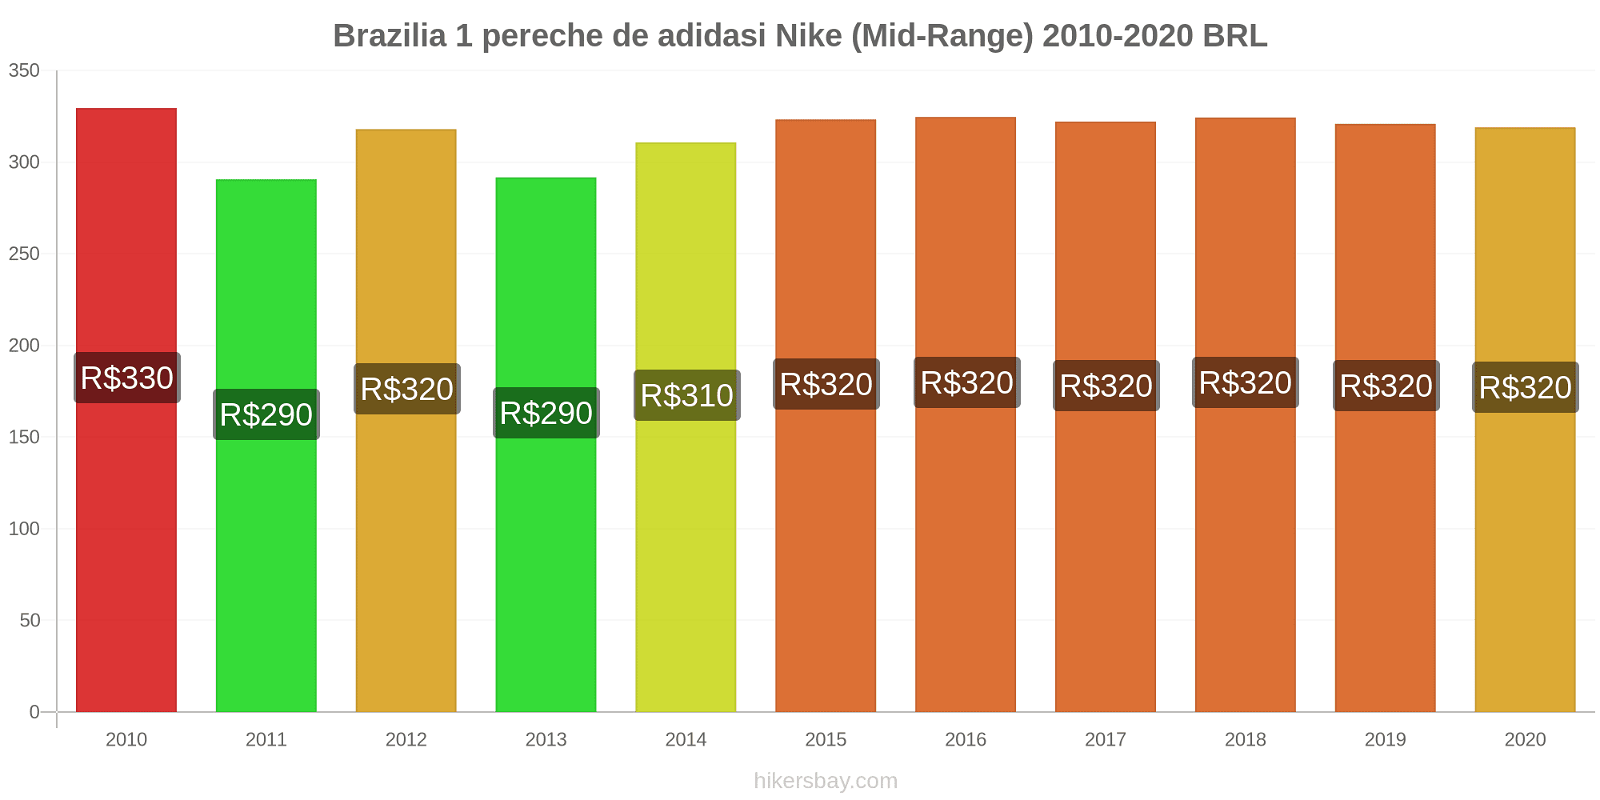 Brazilia modificări de preț 1 pereche de adidasi Nike (Mid-Range) hikersbay.com